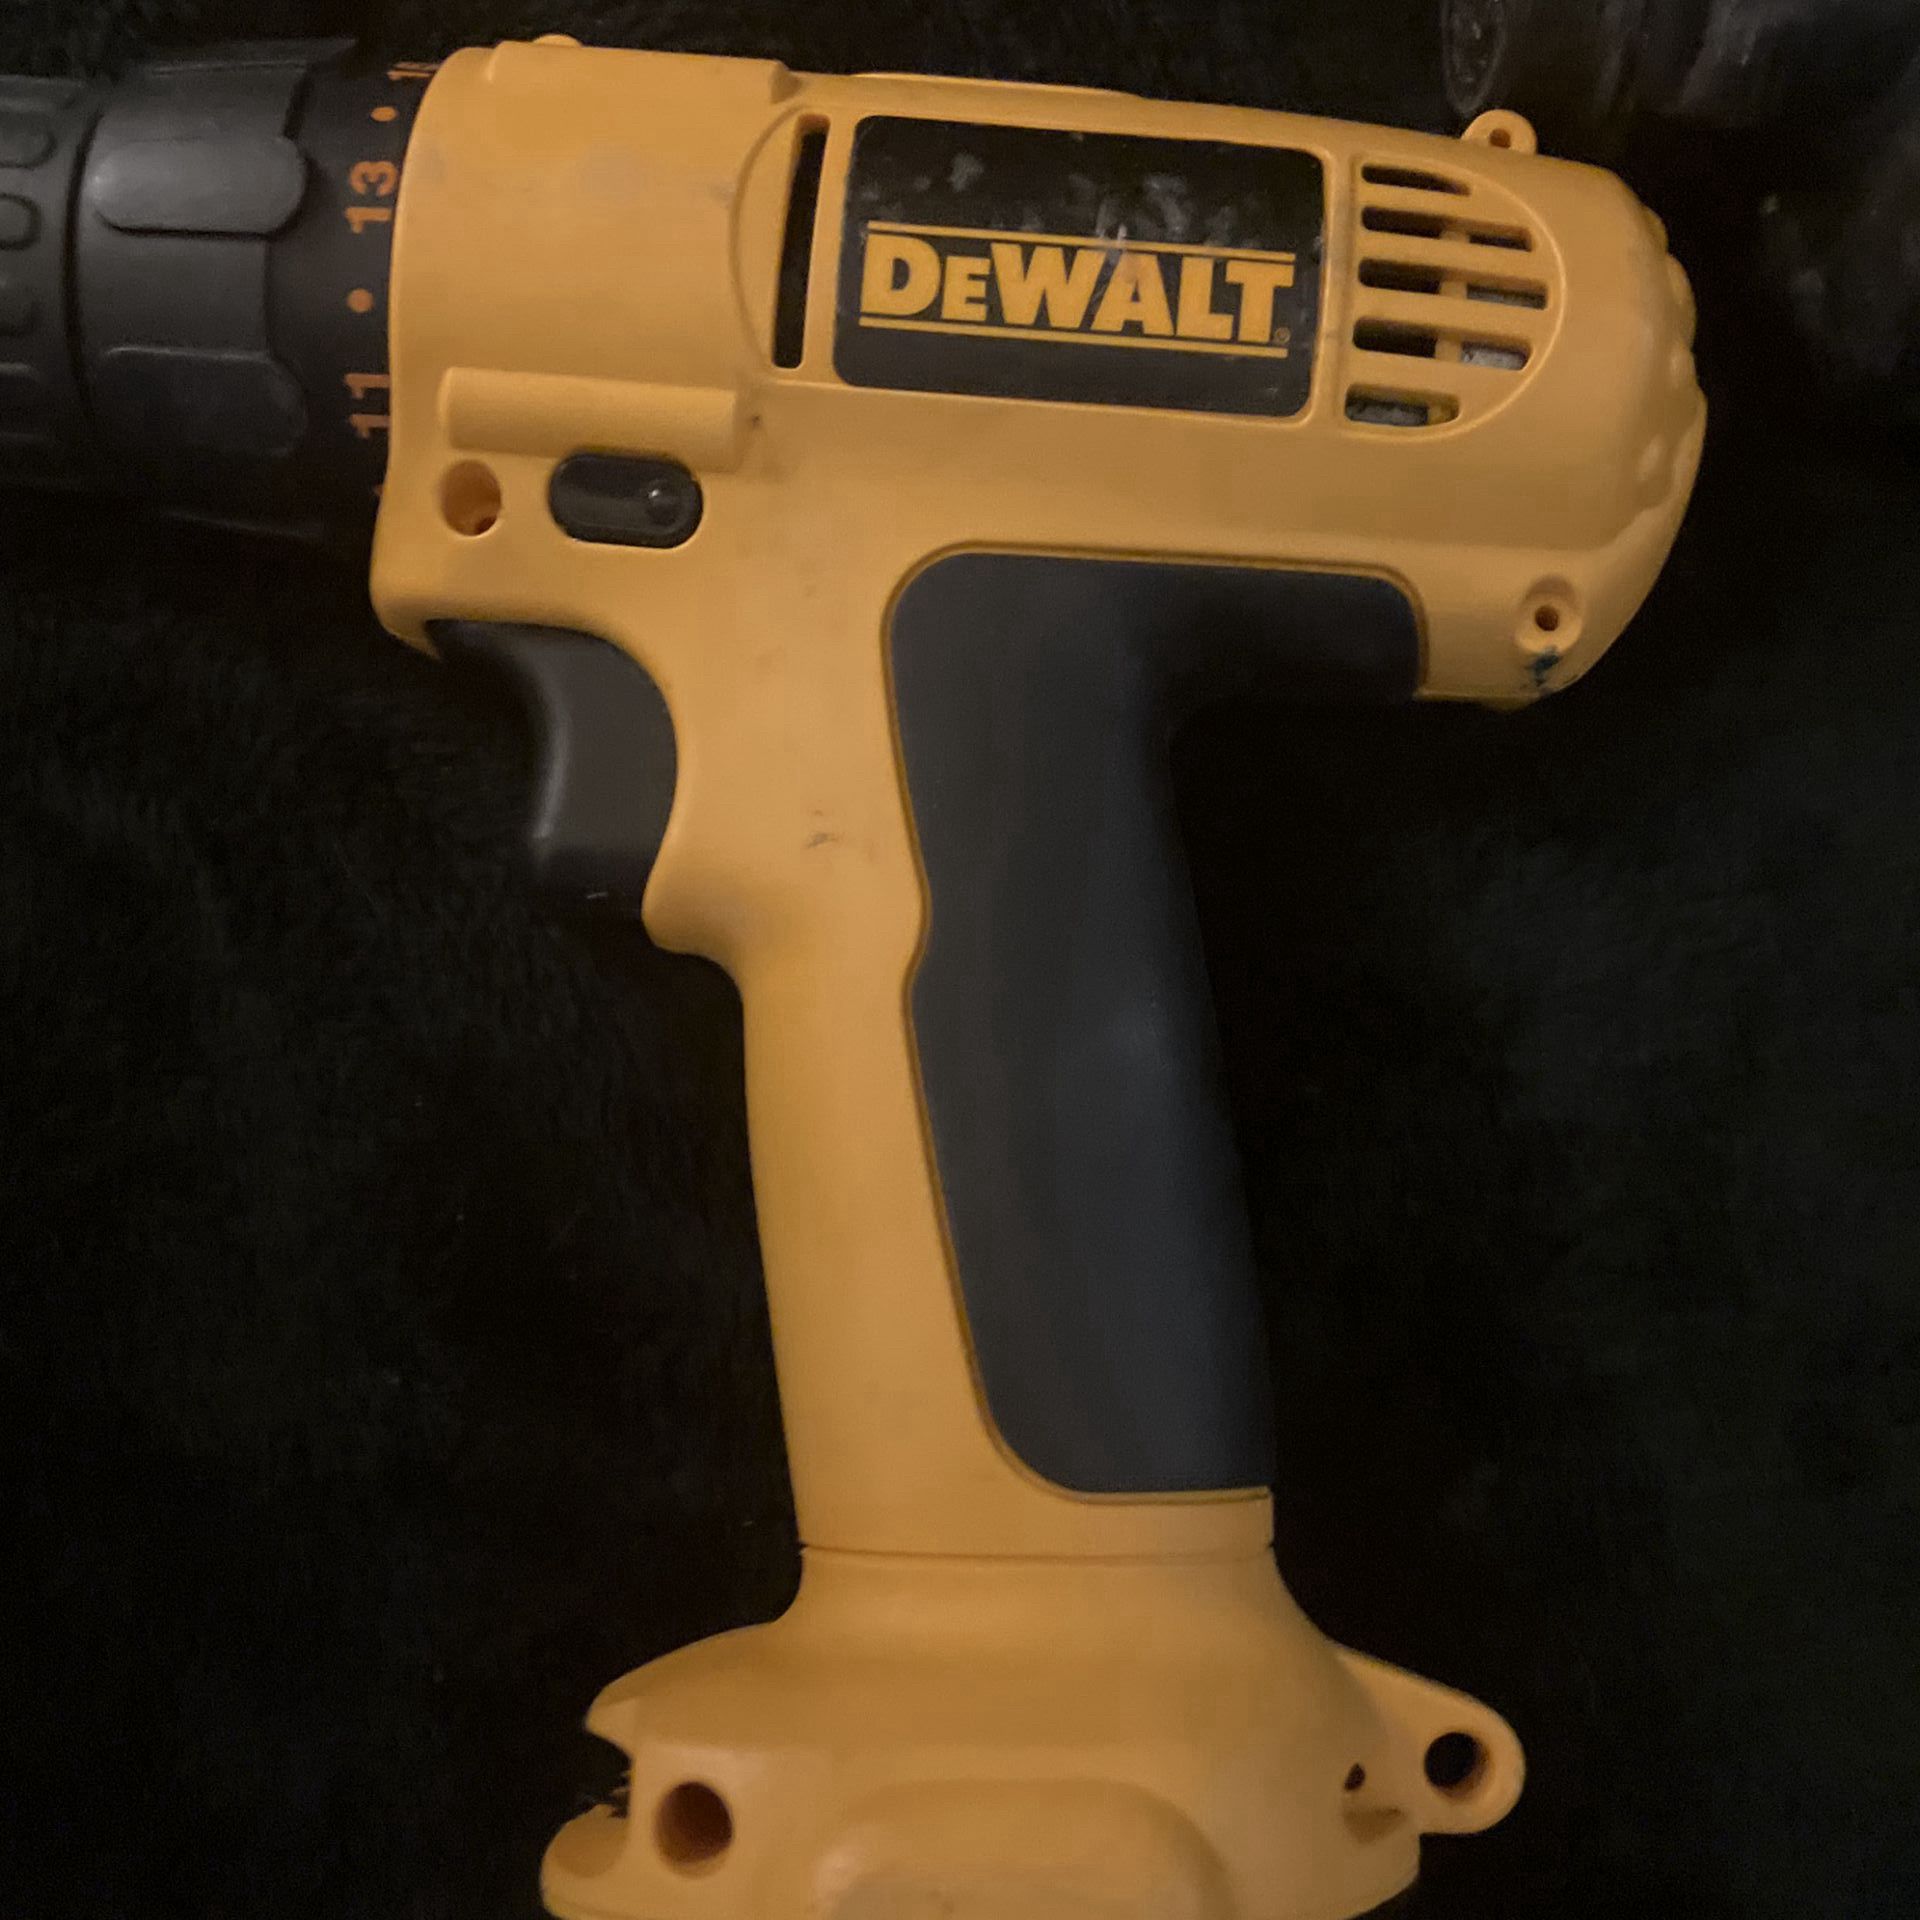 Dewalt Drill (cordless) And 9.6V Battery